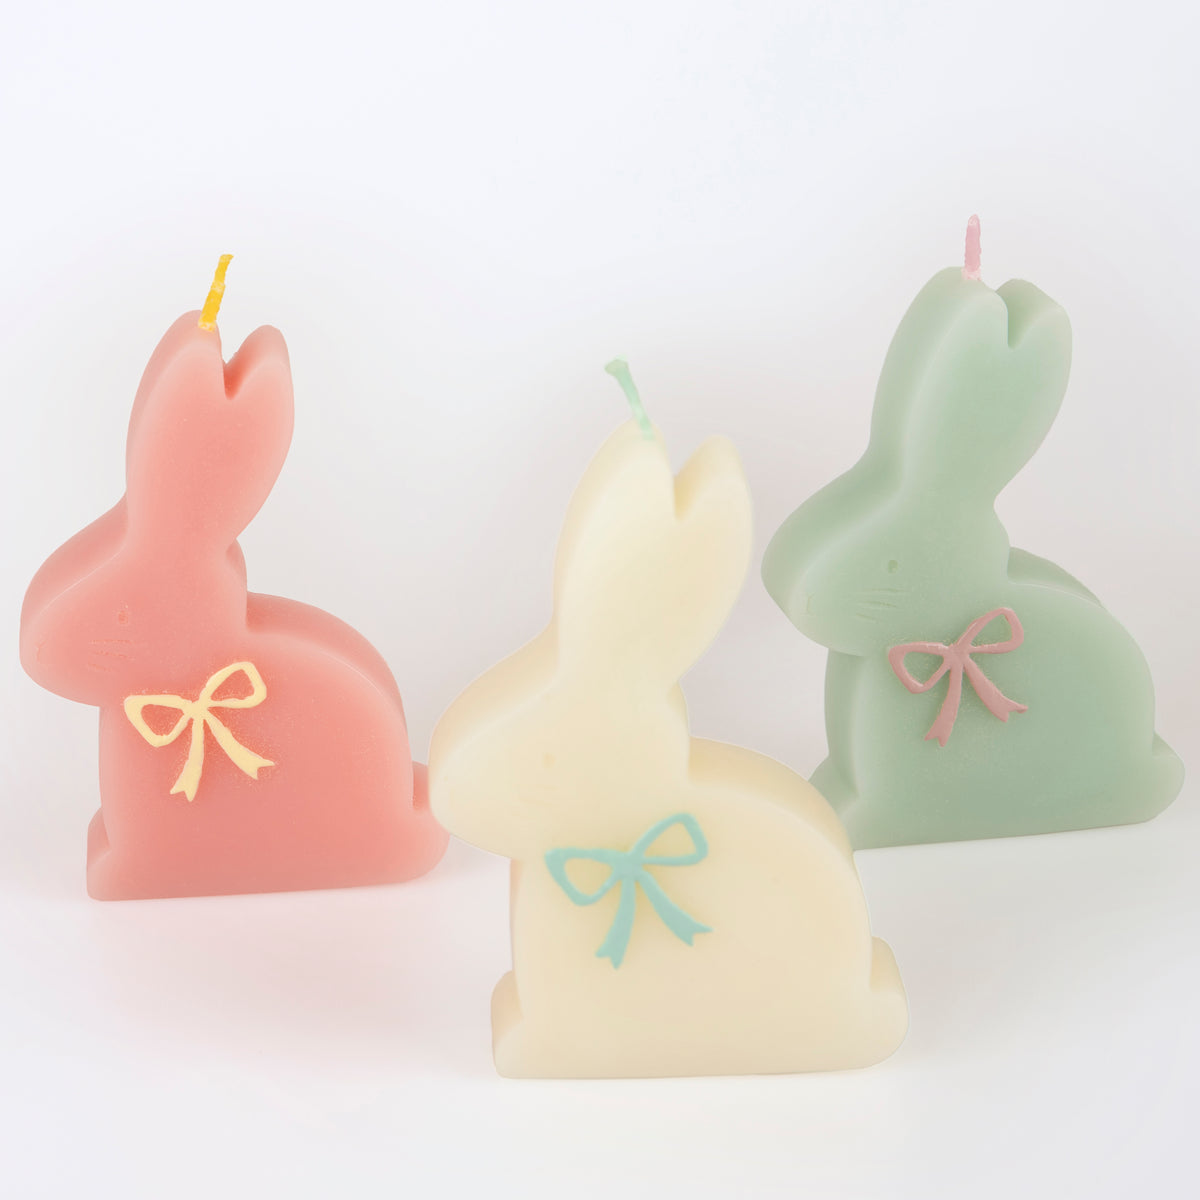 3 HandPainted Needlepoint Kits for Kids -Seashell, Peace Sign, Cupcake